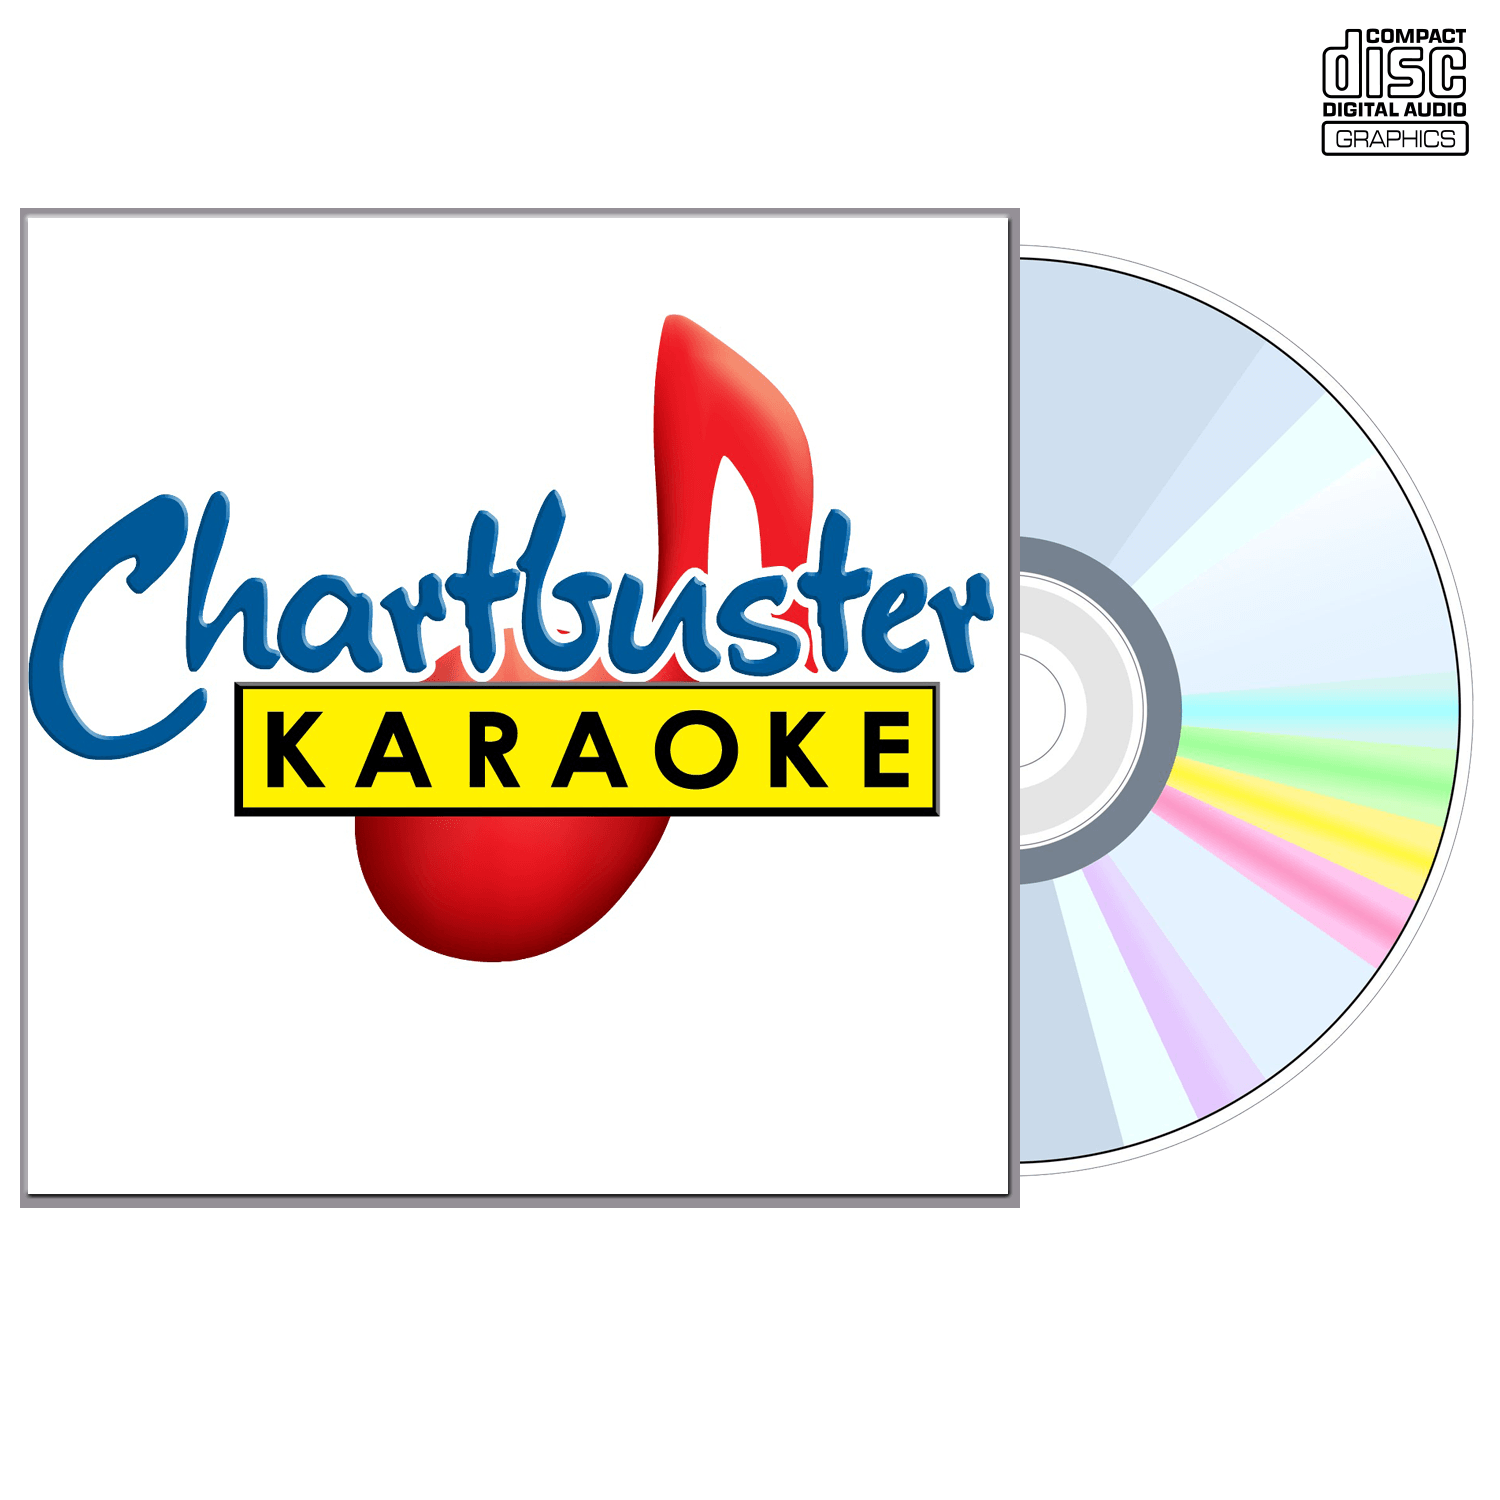 Sounds Of Sixties Vol 05 - CD+G - Chartbuster Karaoke - Karaoke Home Entertainment